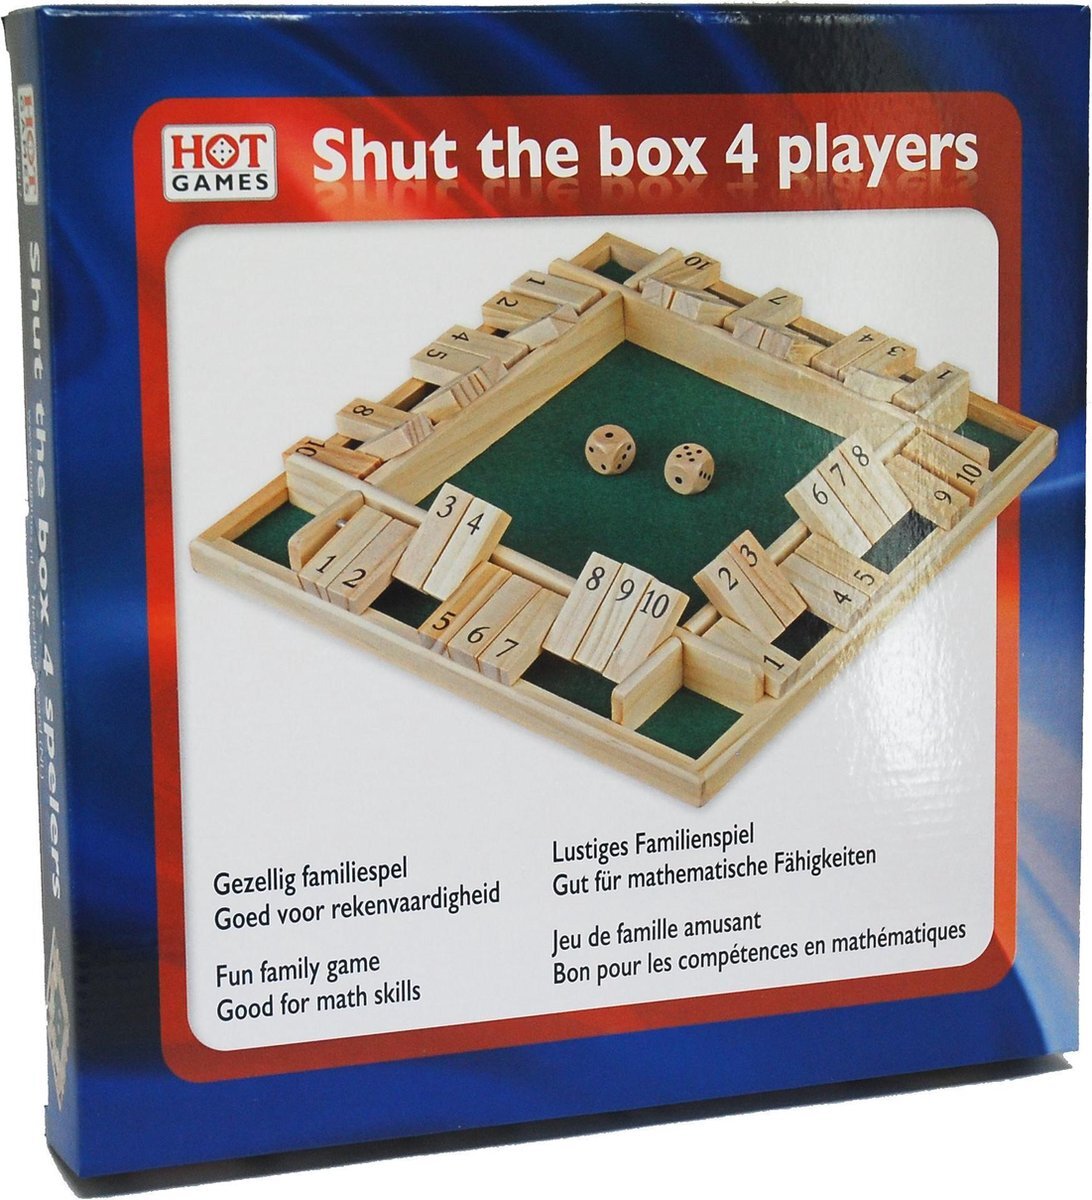 HOT Games Shut the Box Spel 4 spelers 10 cijfers 29x29cm. Hout